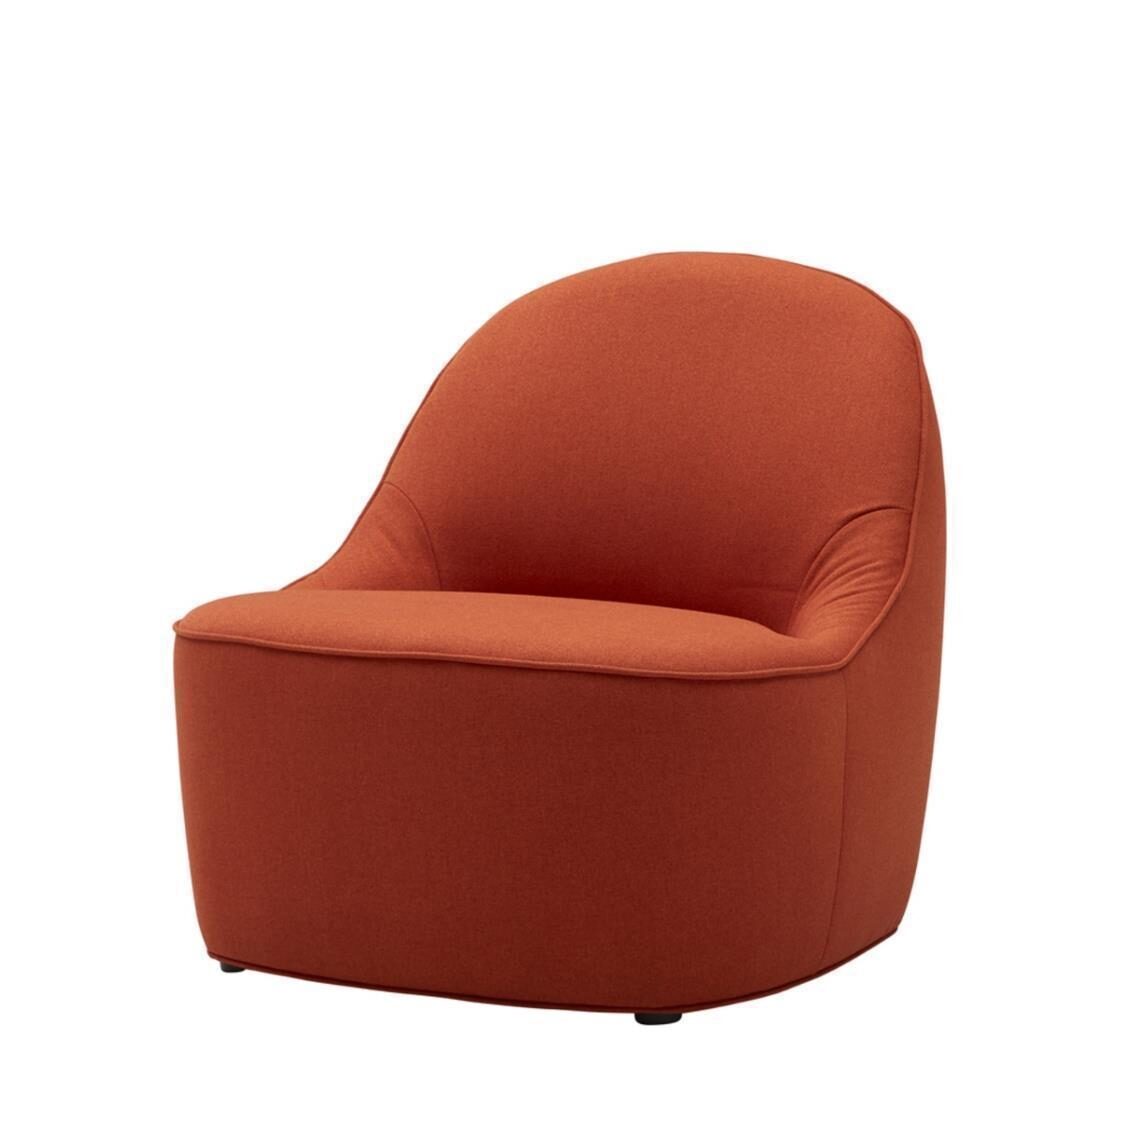 Iloom Stone Chair 458 Brick Orange